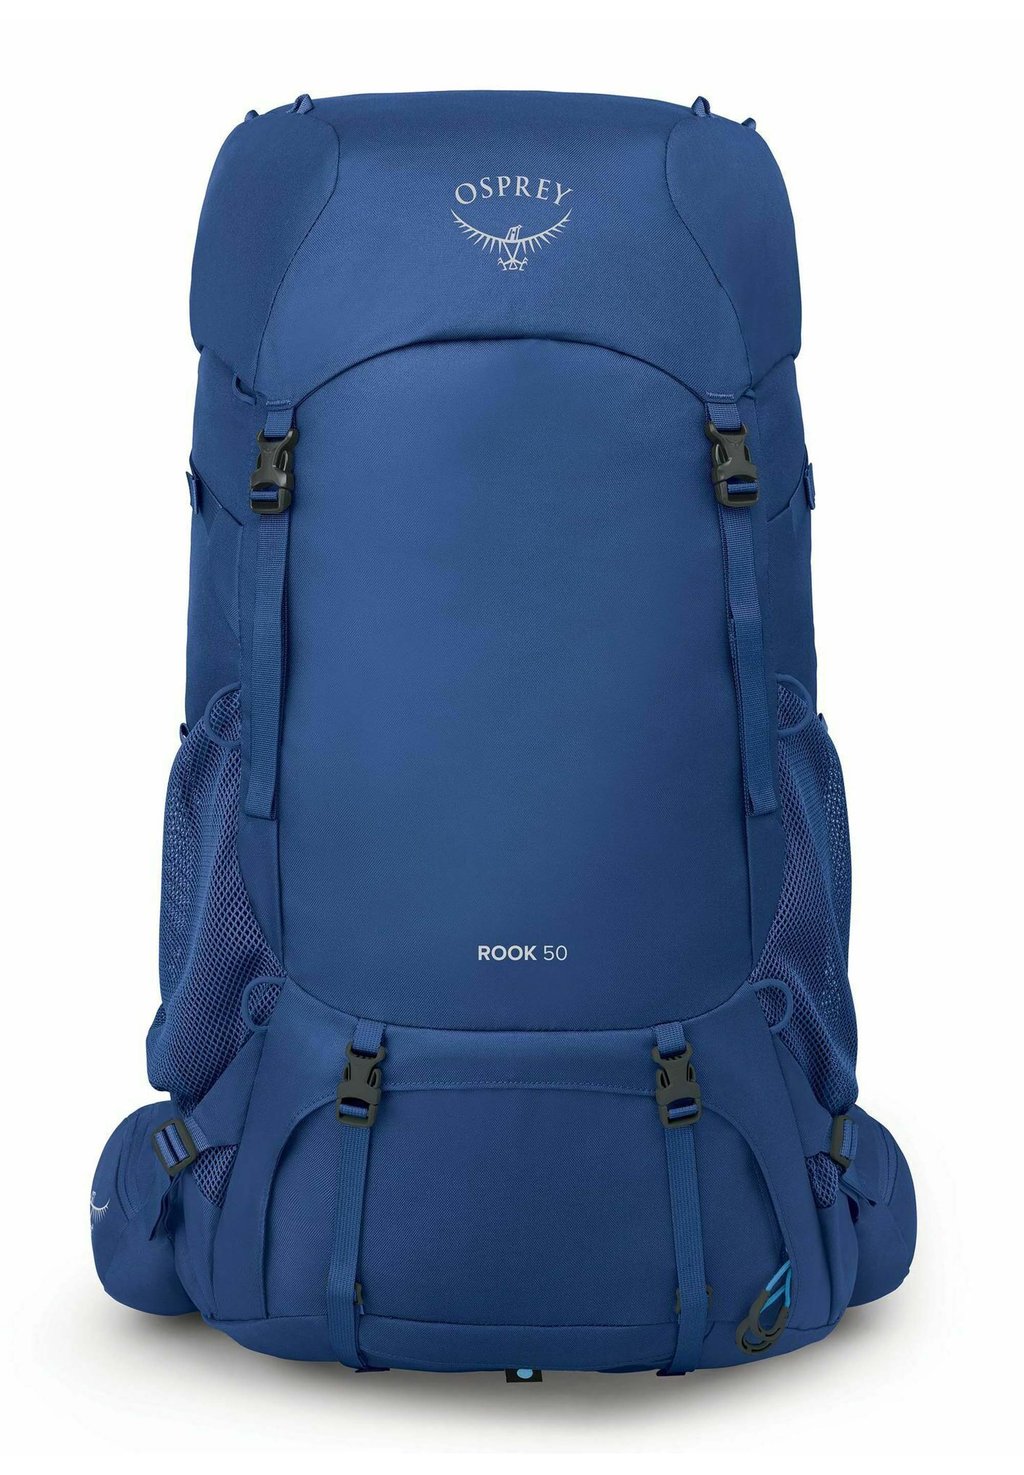 Треккинговый рюкзак ROOK Osprey, цвет astology blue blue flame